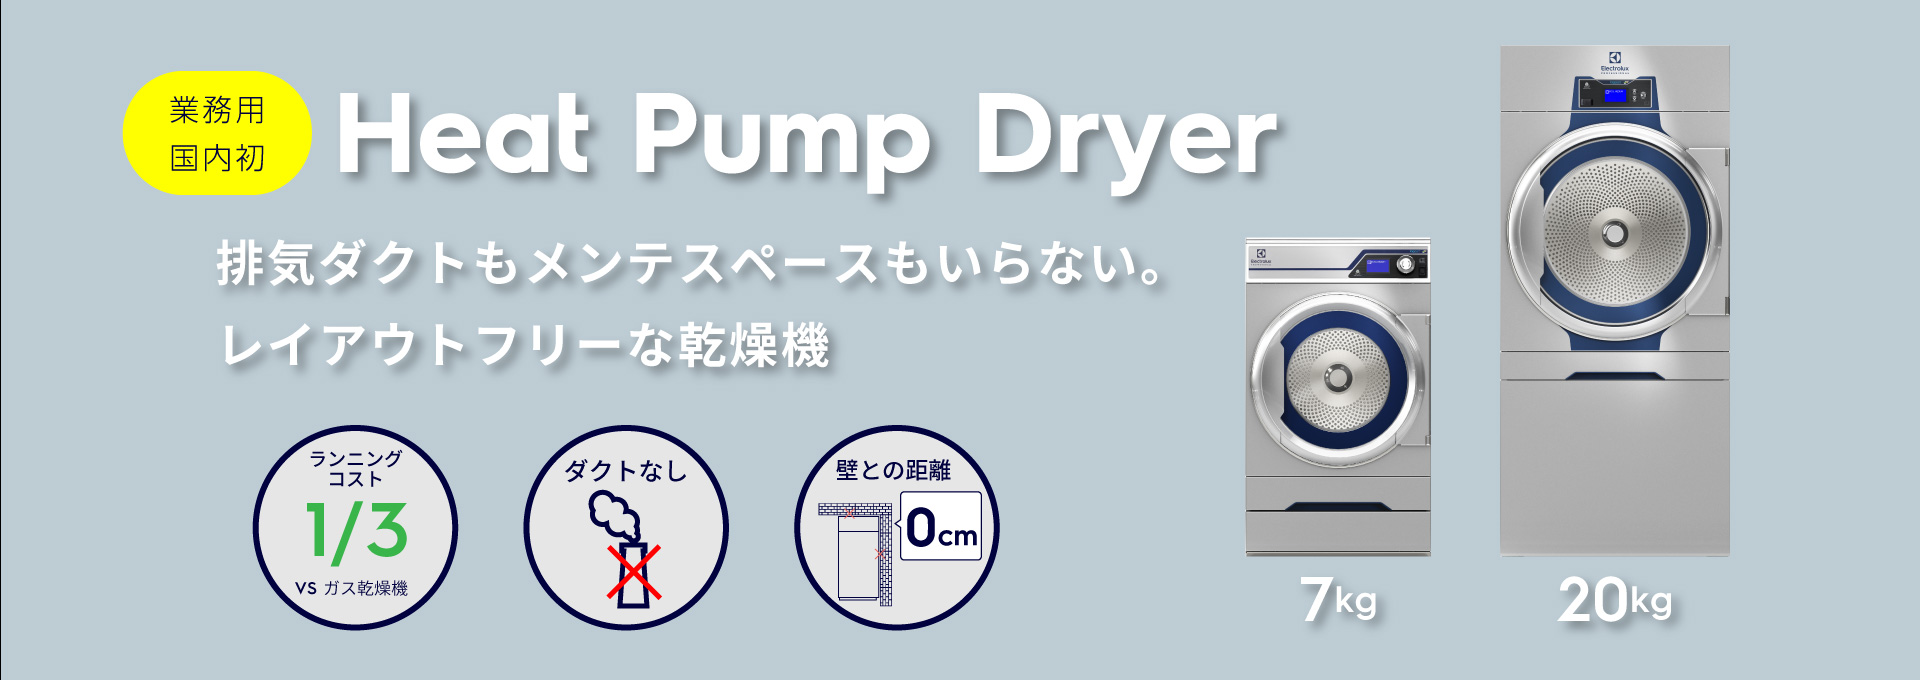 heat-pump-banner_desktop